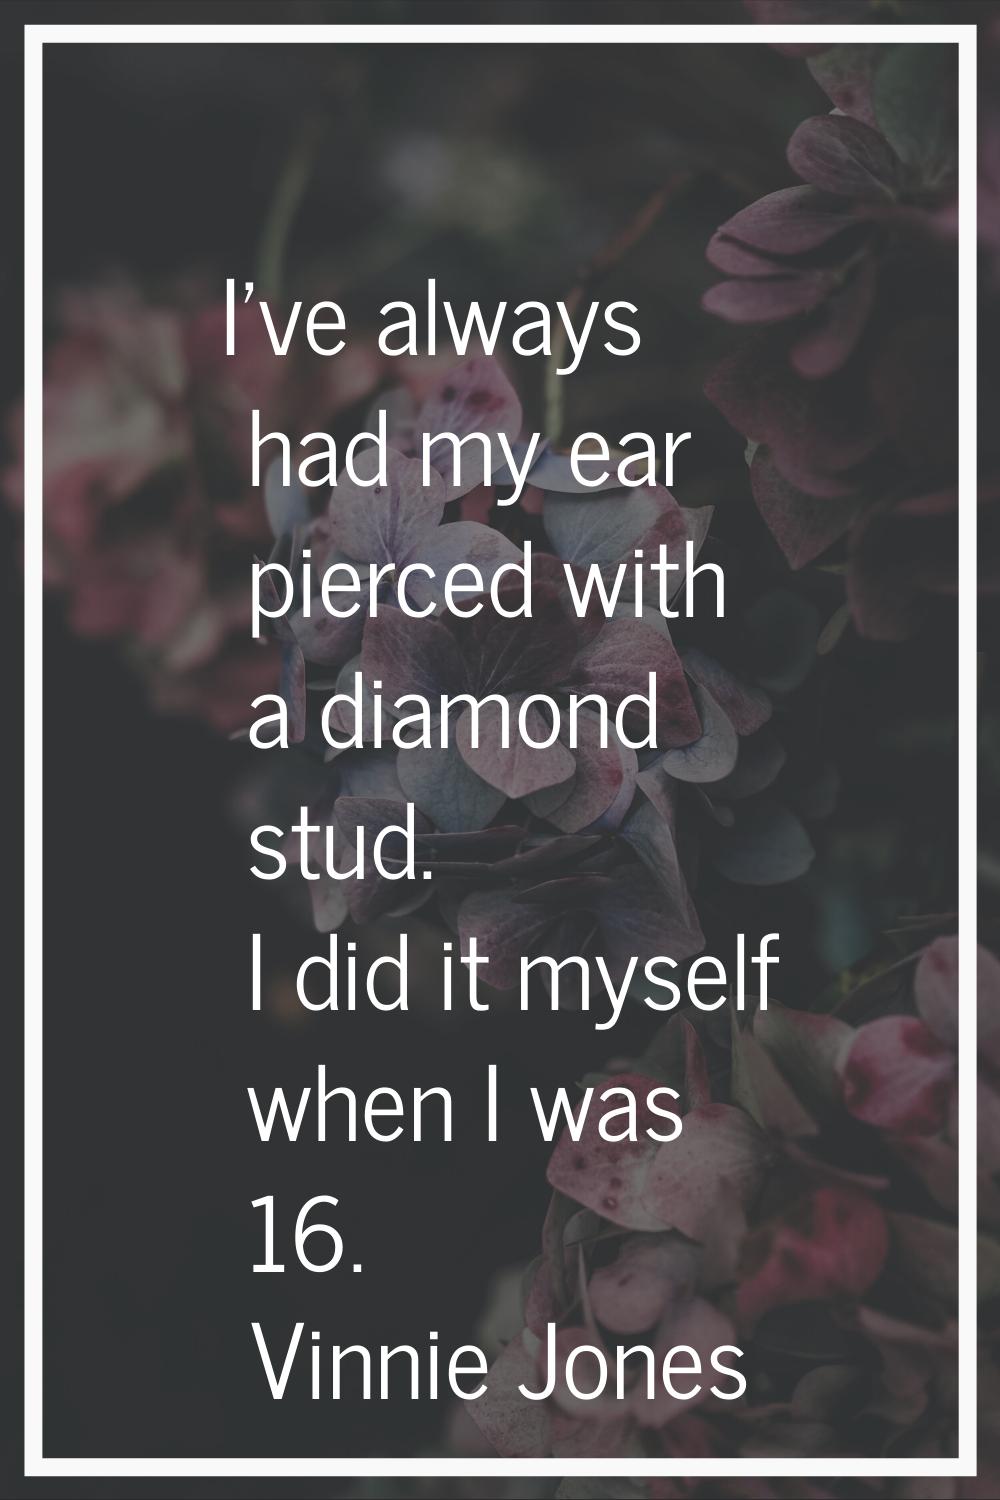 I've always had my ear pierced with a diamond stud. I did it myself when I was 16.